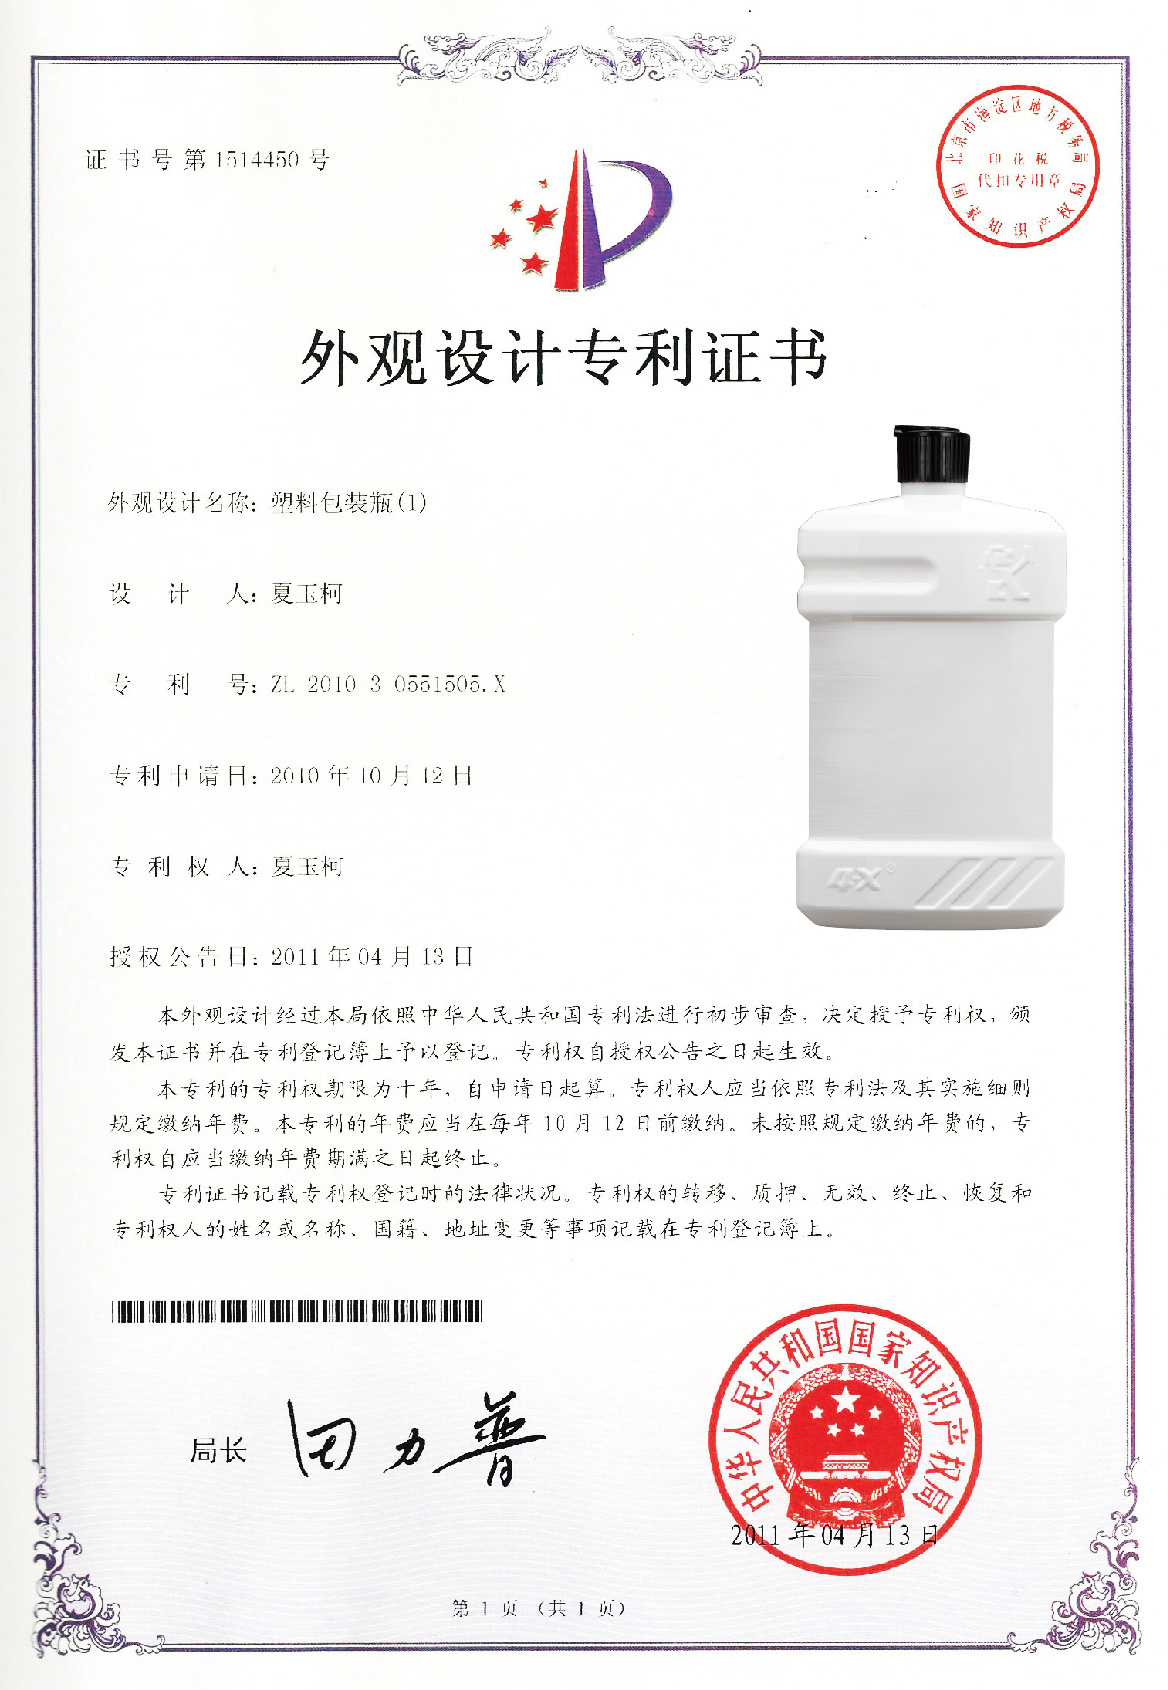 Patente de botella de plástico shike 1